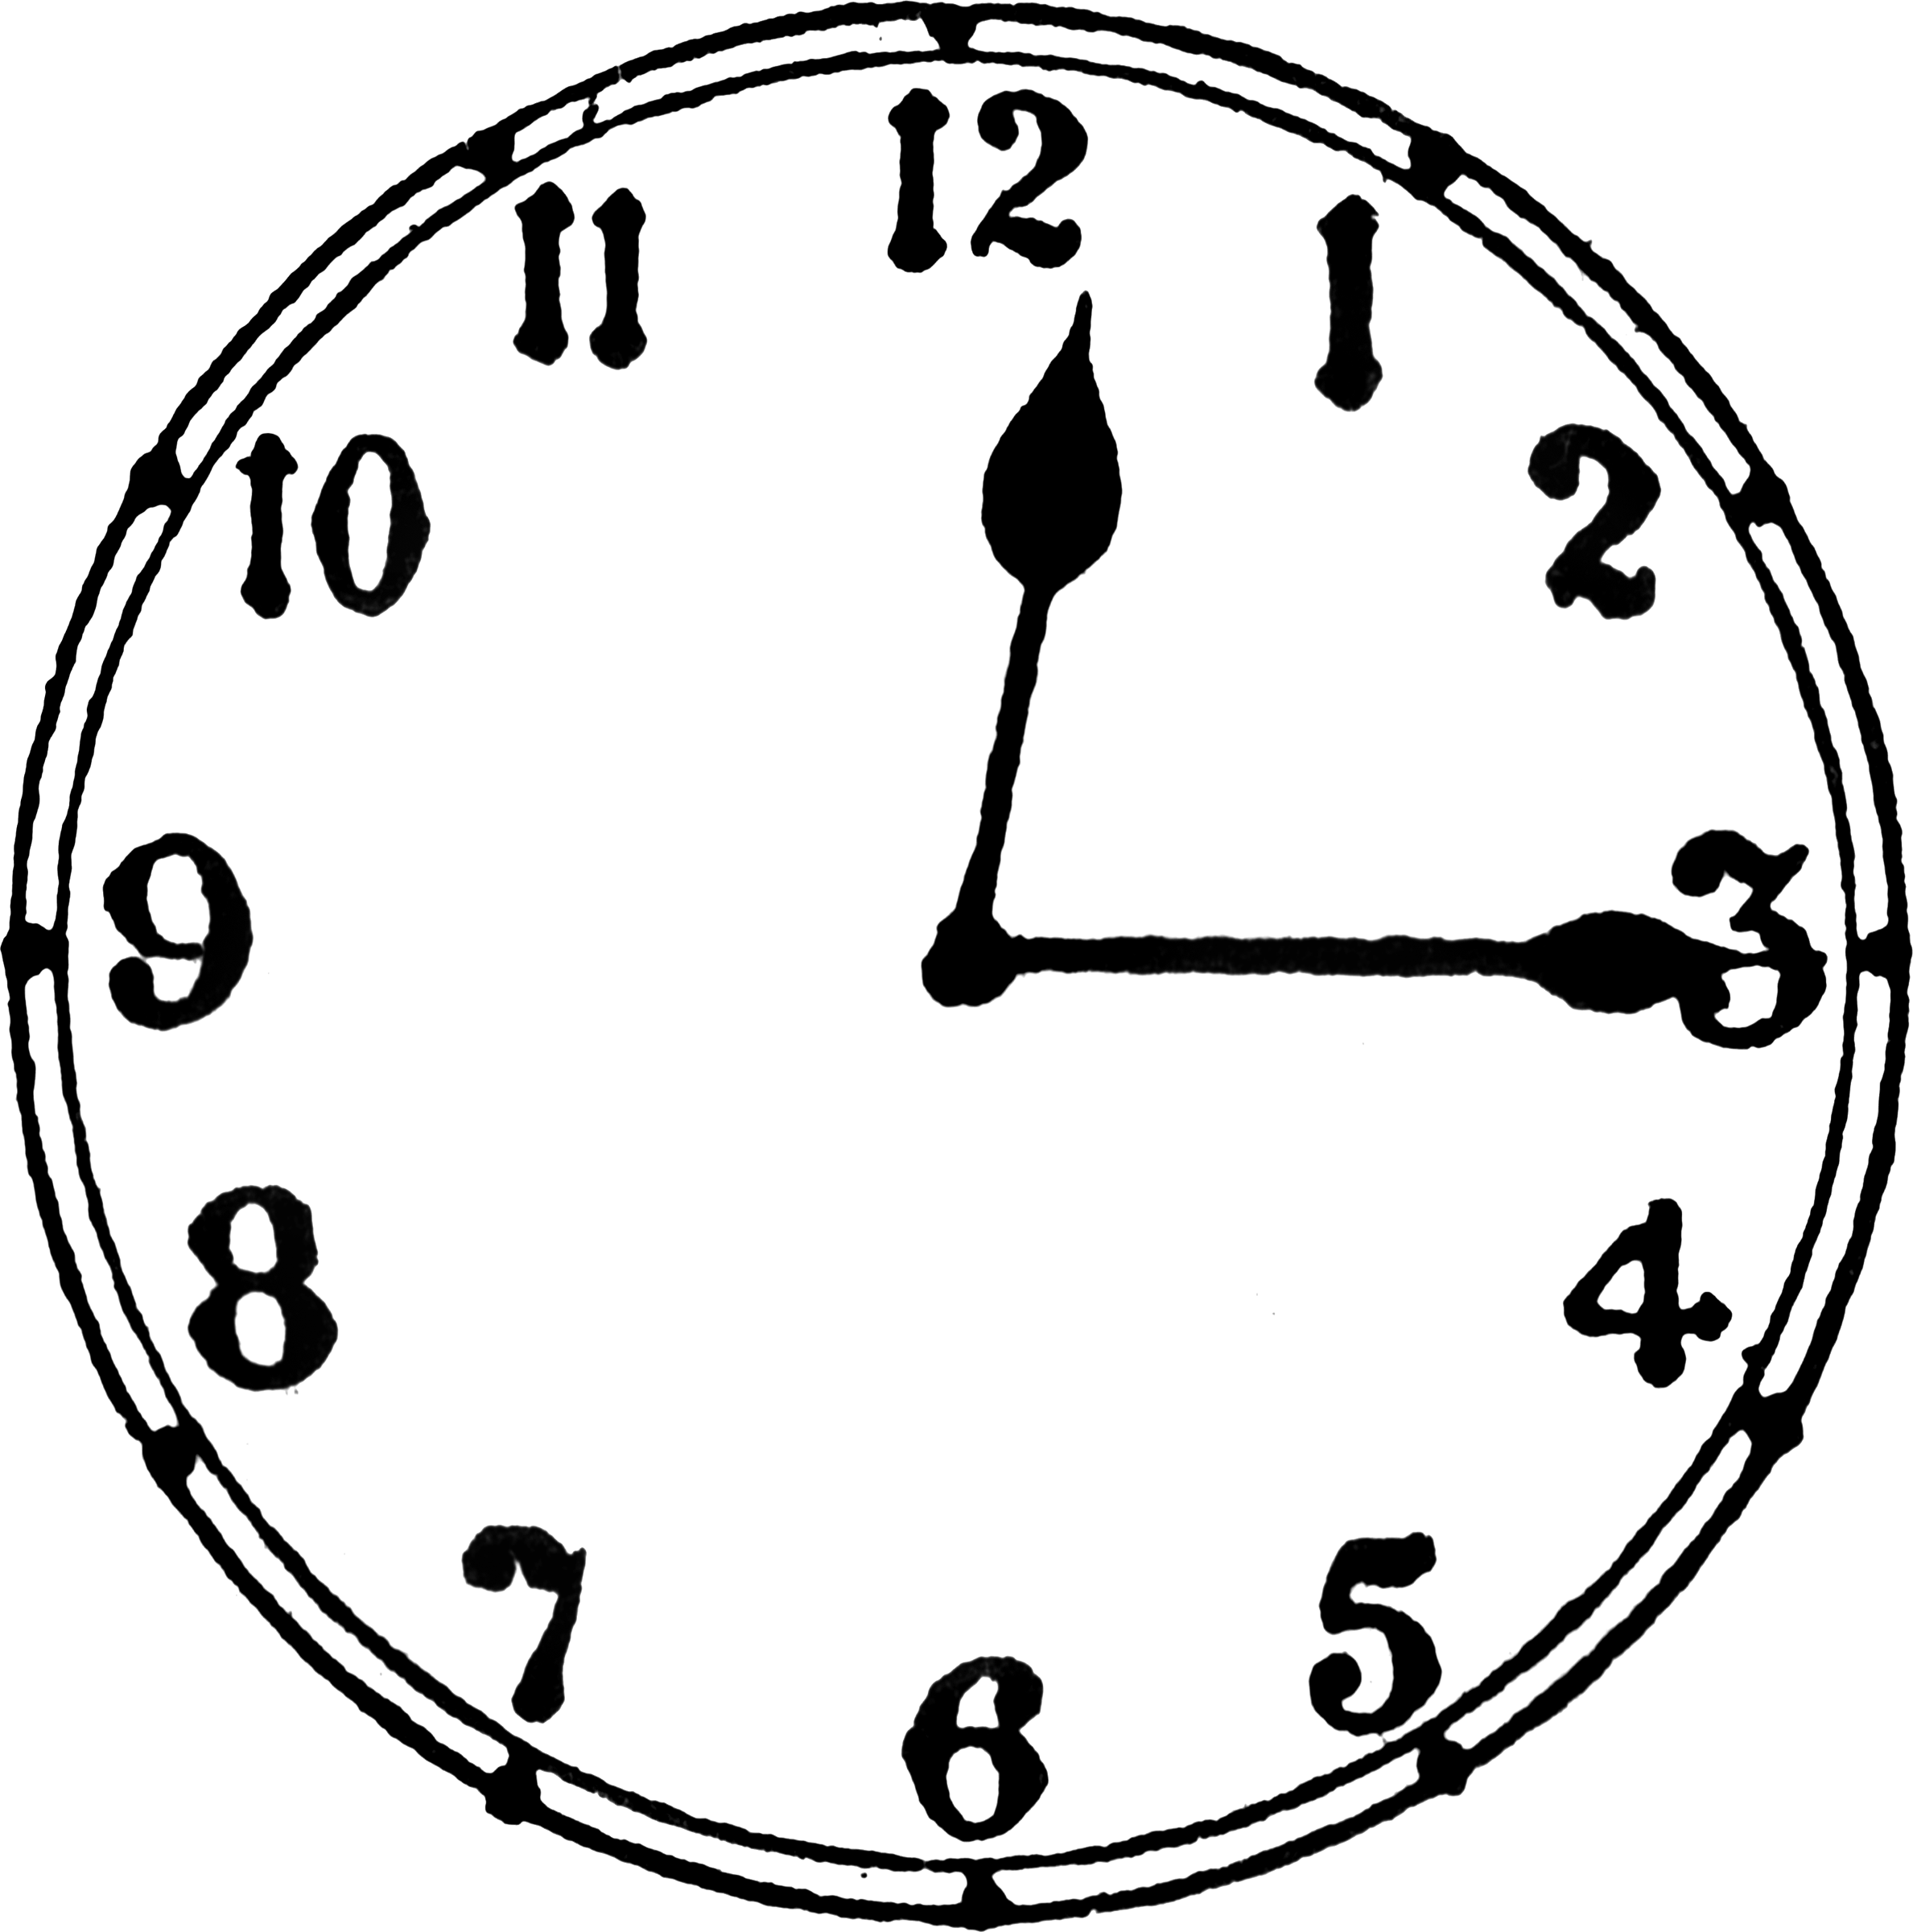 Установить на часах время 12. Часы 12:15. Циферблат 12 часов 15 минут. Часы рисунок циферблат. 12 Часов 15 минут на часах.